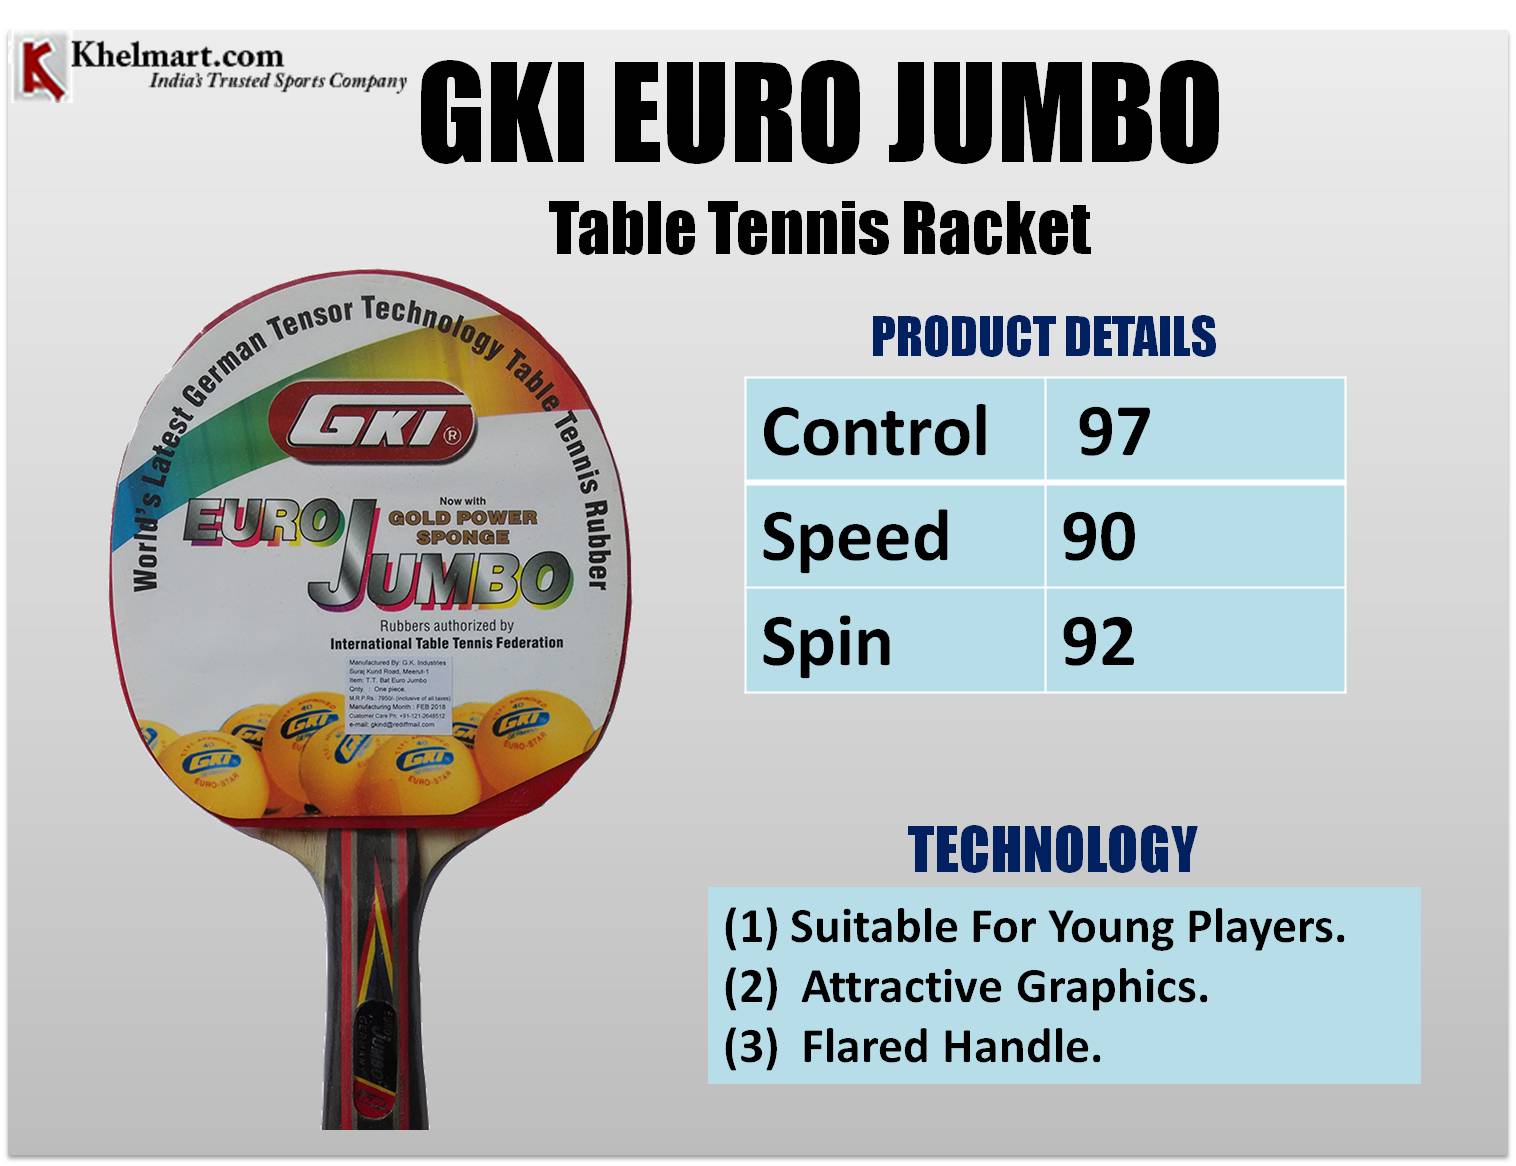 GKI_EURO_JUMBO_Table_Tennis_Racket.jpg